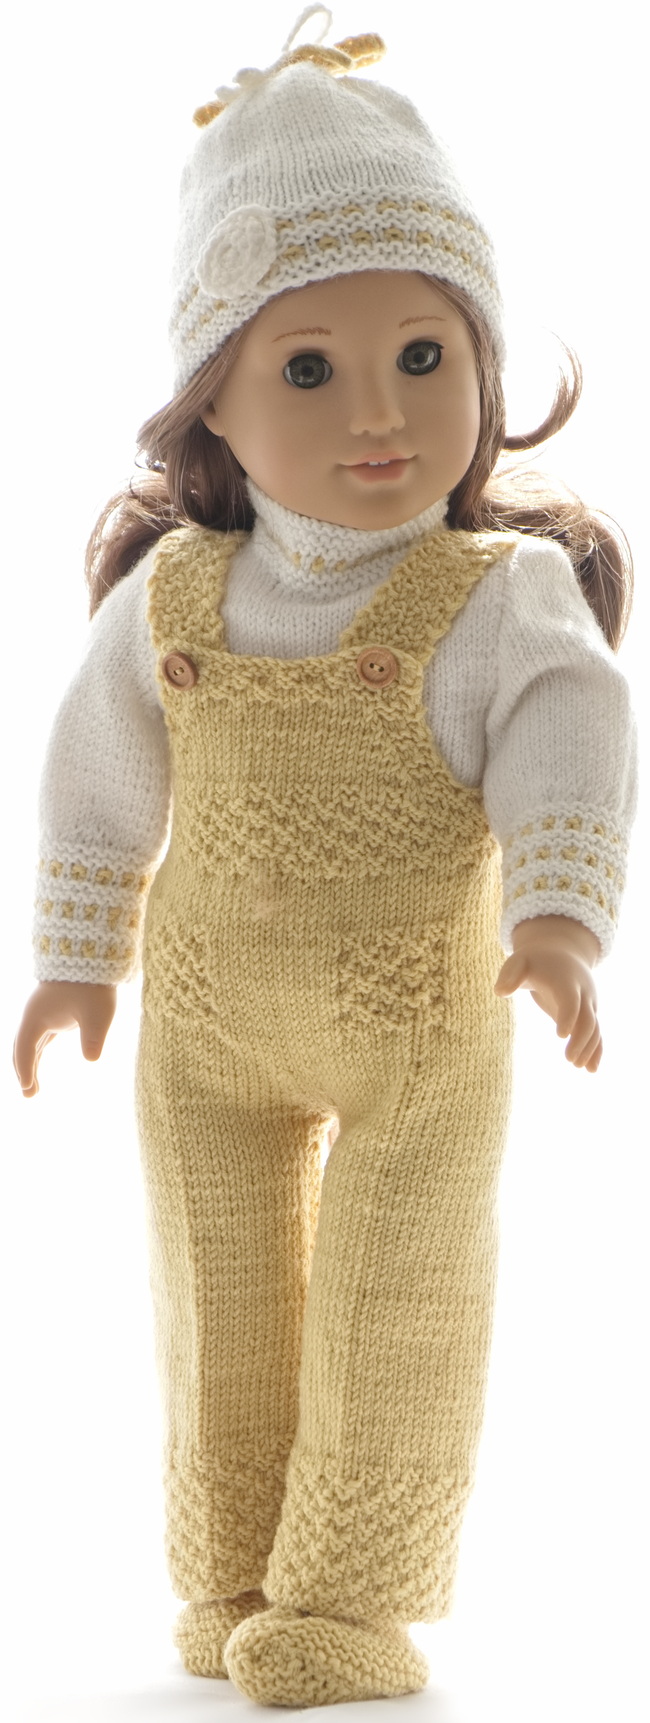 0243-24-knit-pattern-for-pants-18-doll.jpg